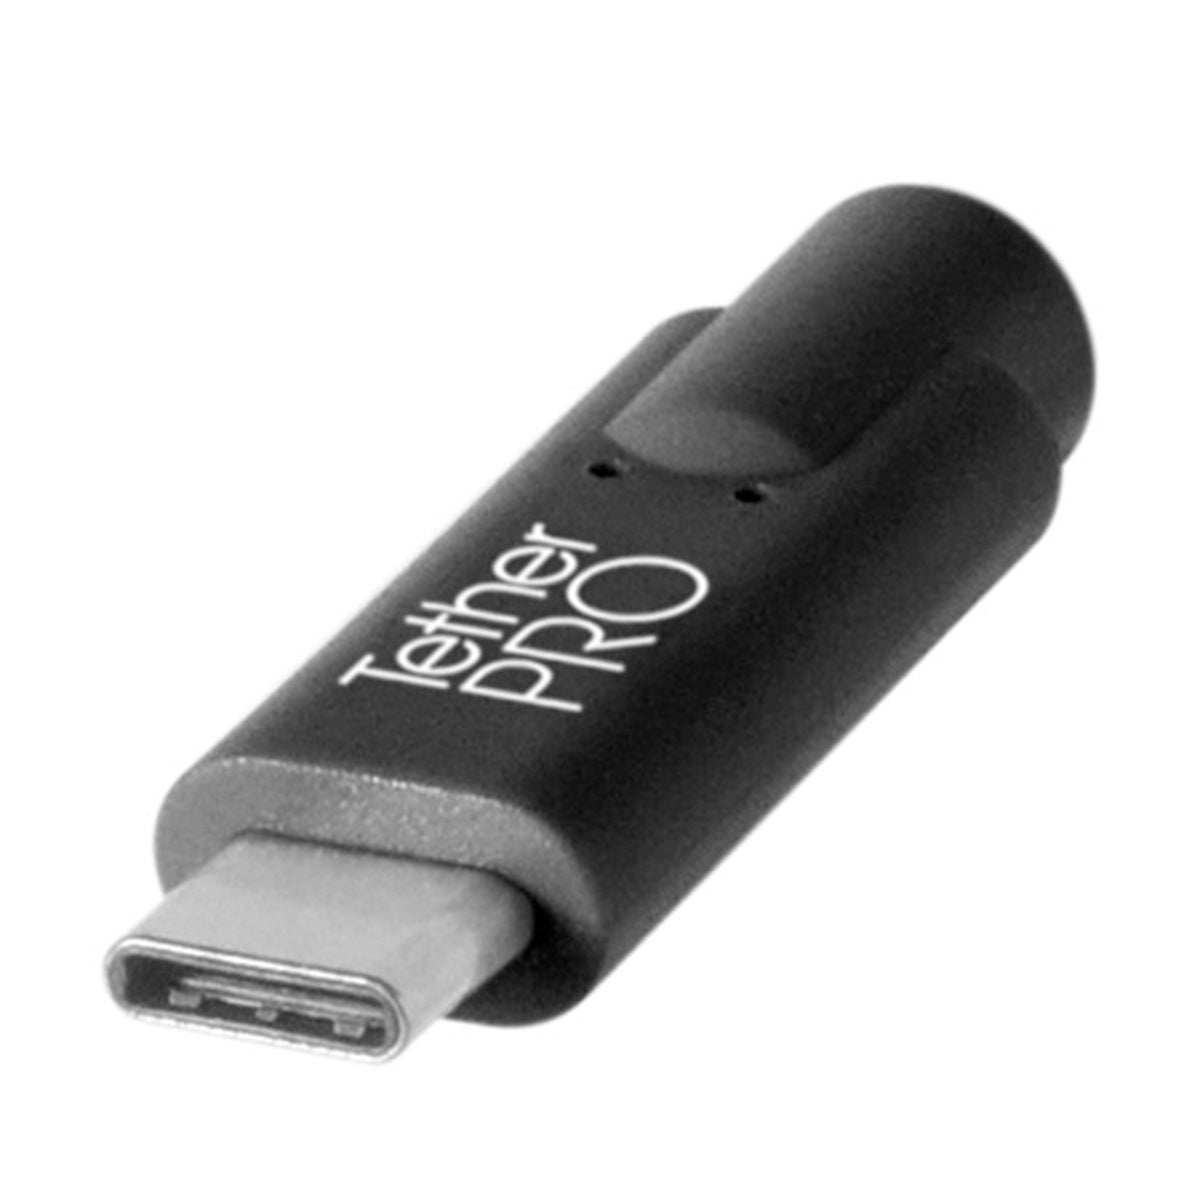 Tether Tools TetherPro USB 3.0 to USB-C, 15’ (4.6m) BLK